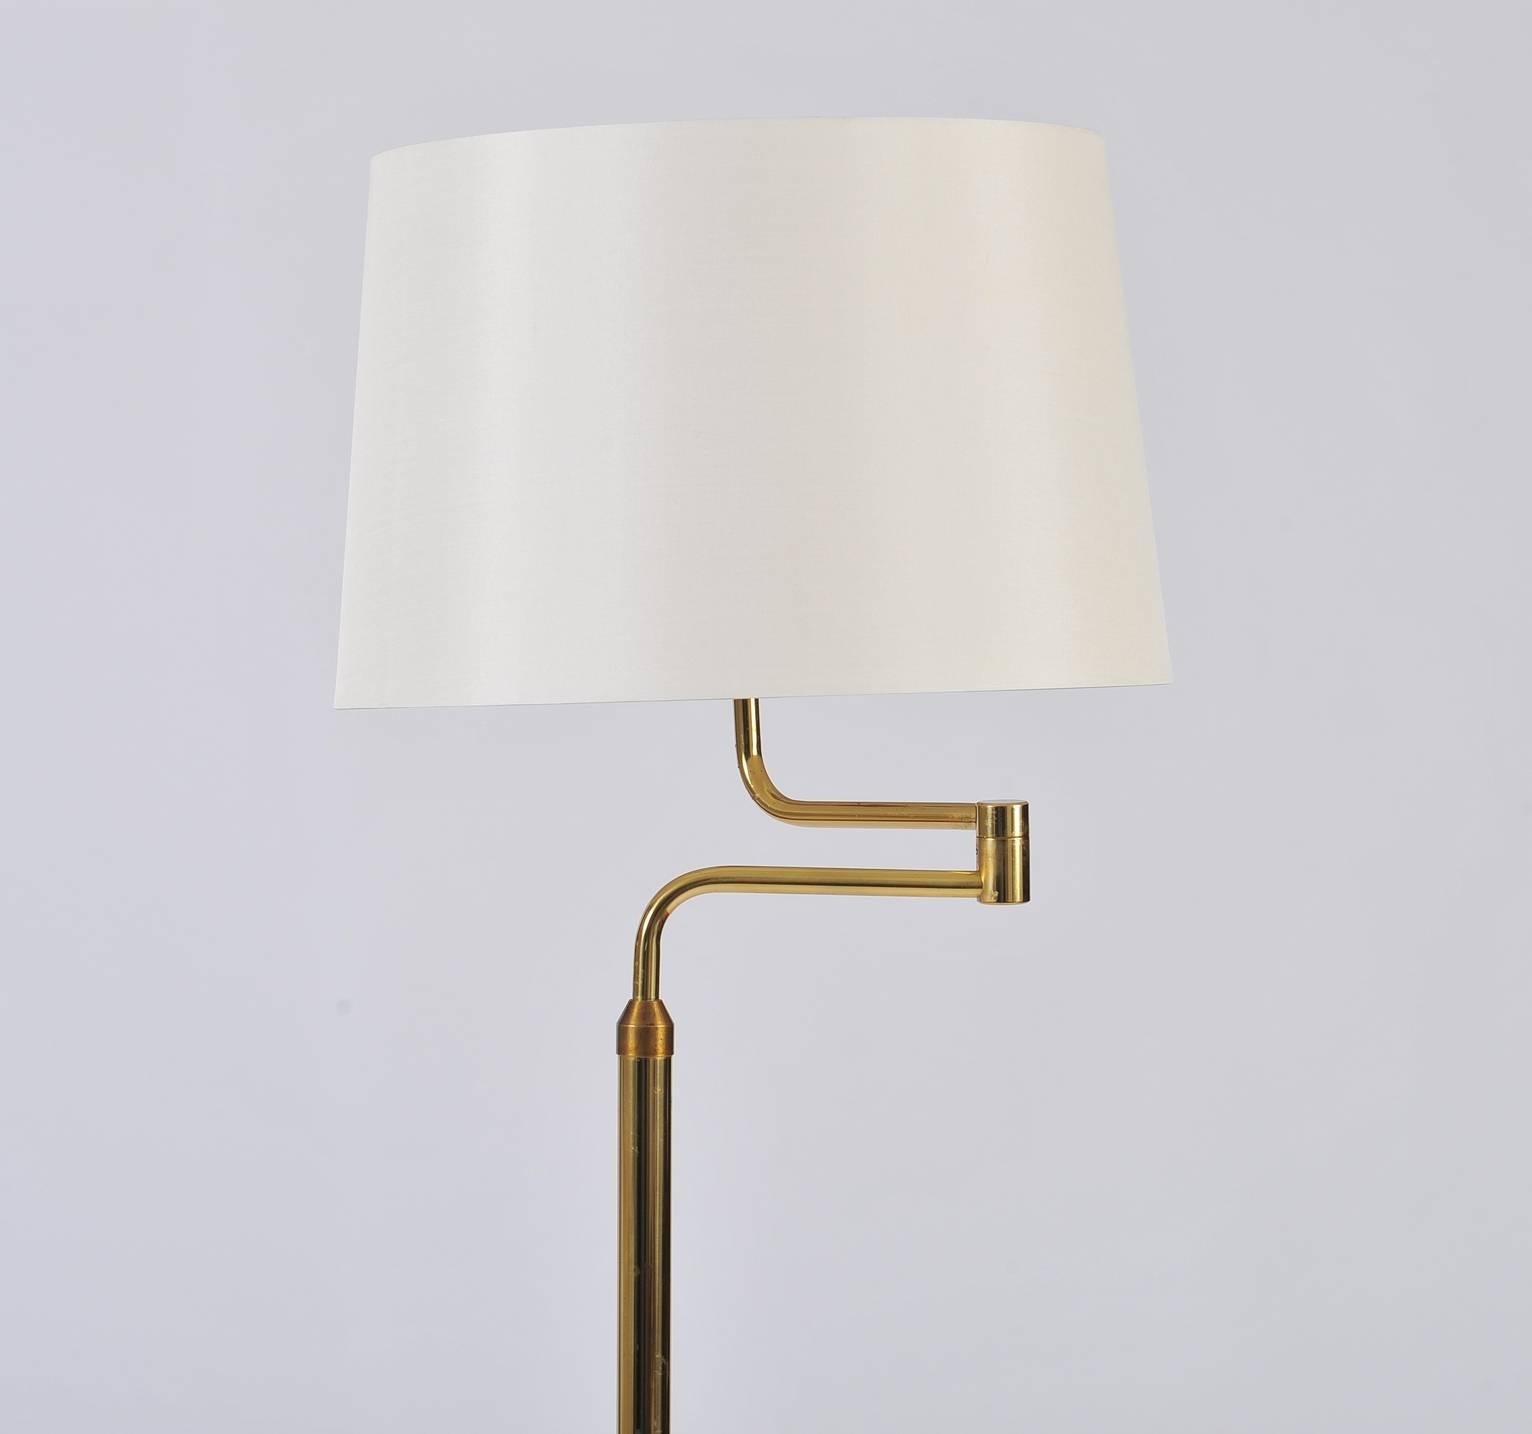 20th Century Midcentury Brass Reading Floor Lamp, by Arnesen & Sønn